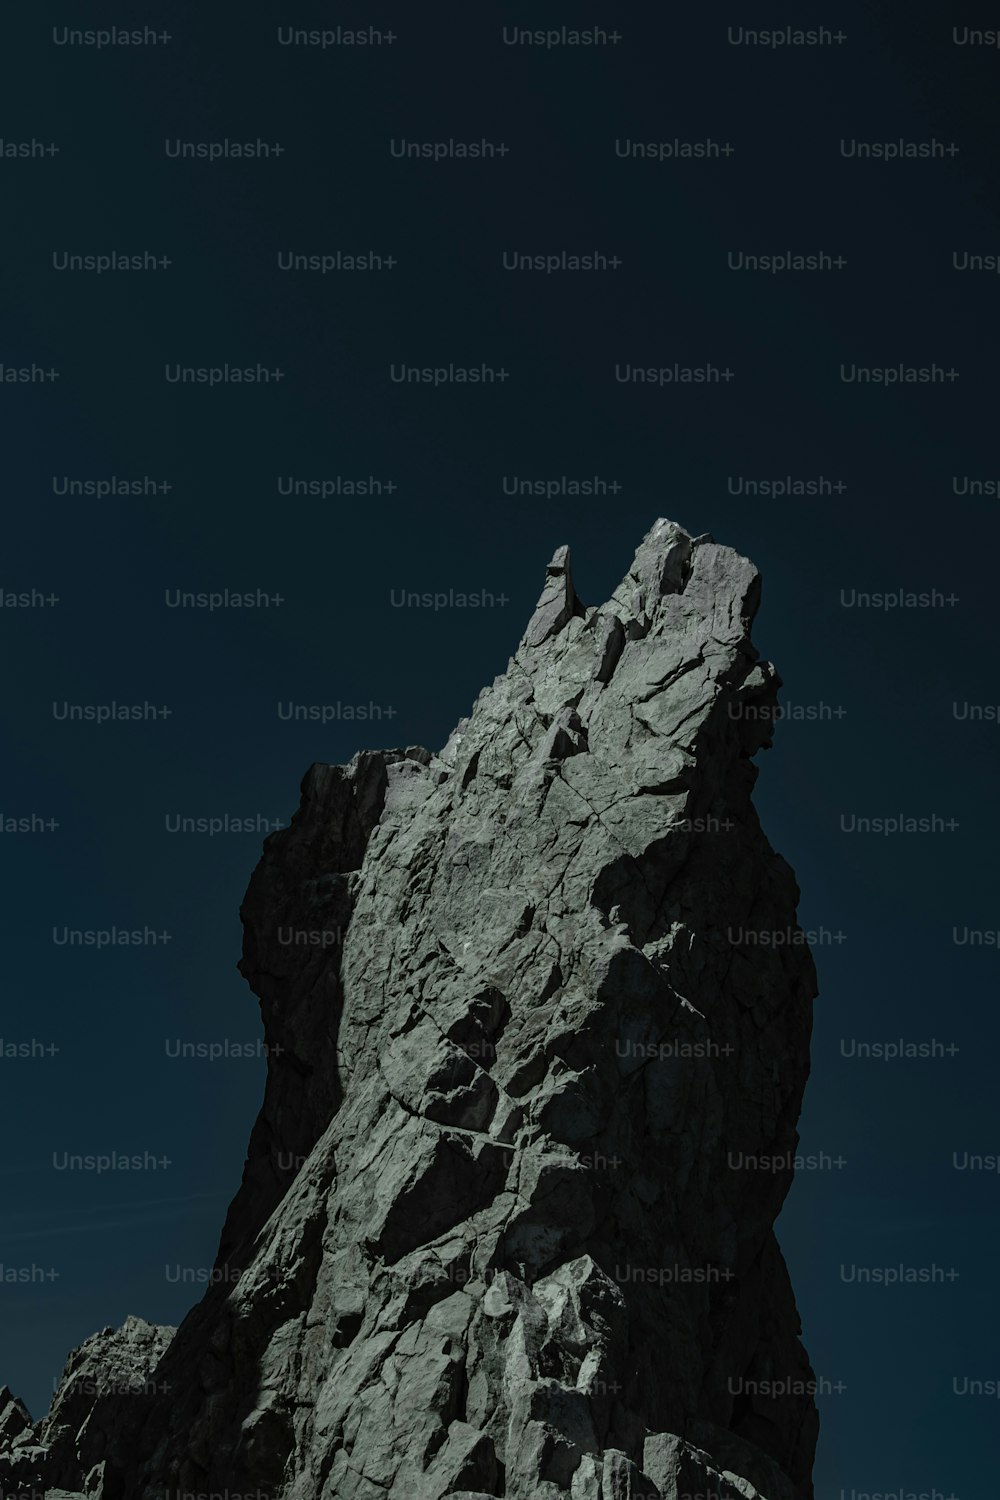 Una persona parada en la cima de una gran roca